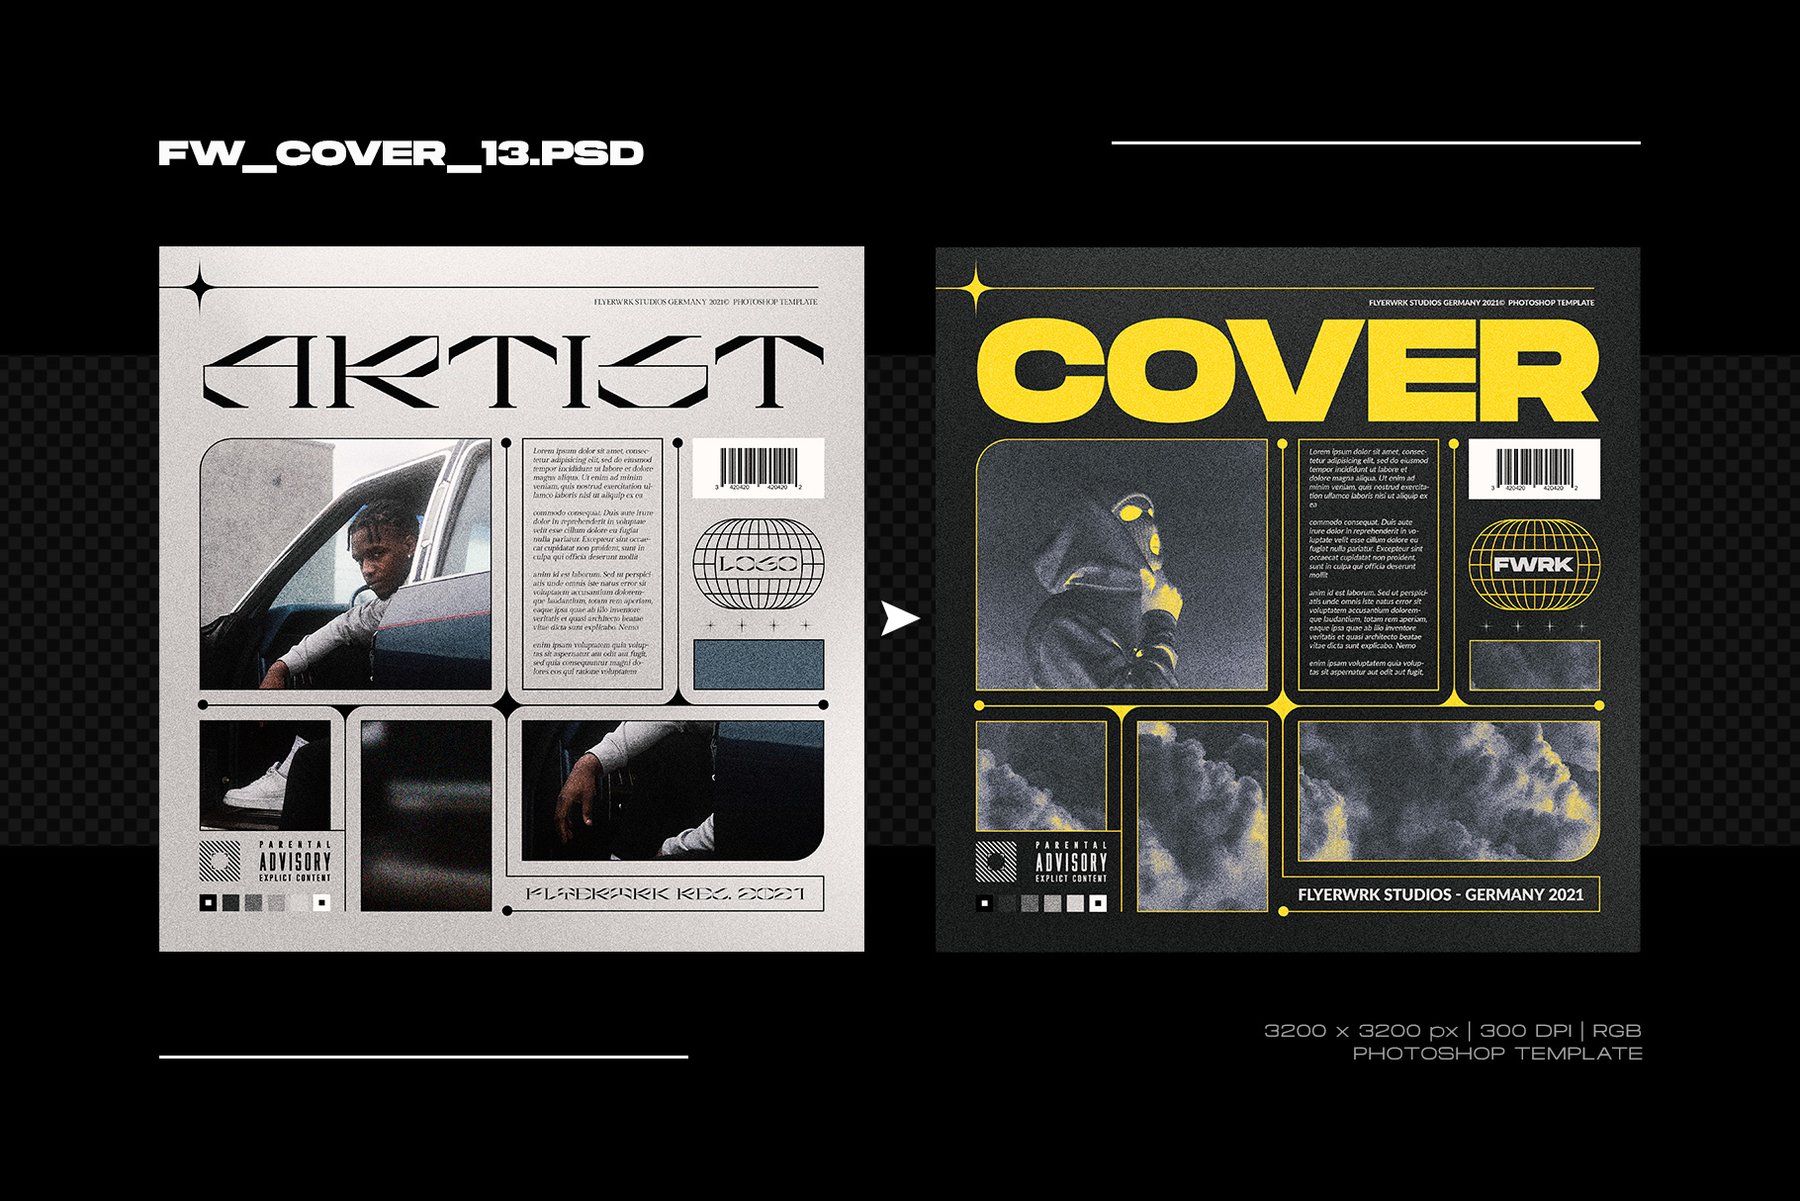 Flyerwrk 嘻哈说唱高级创意大胆艺术魅力封面设计Photoshop模板 COVER DESIGNS VOL.03 图标素材 第4张